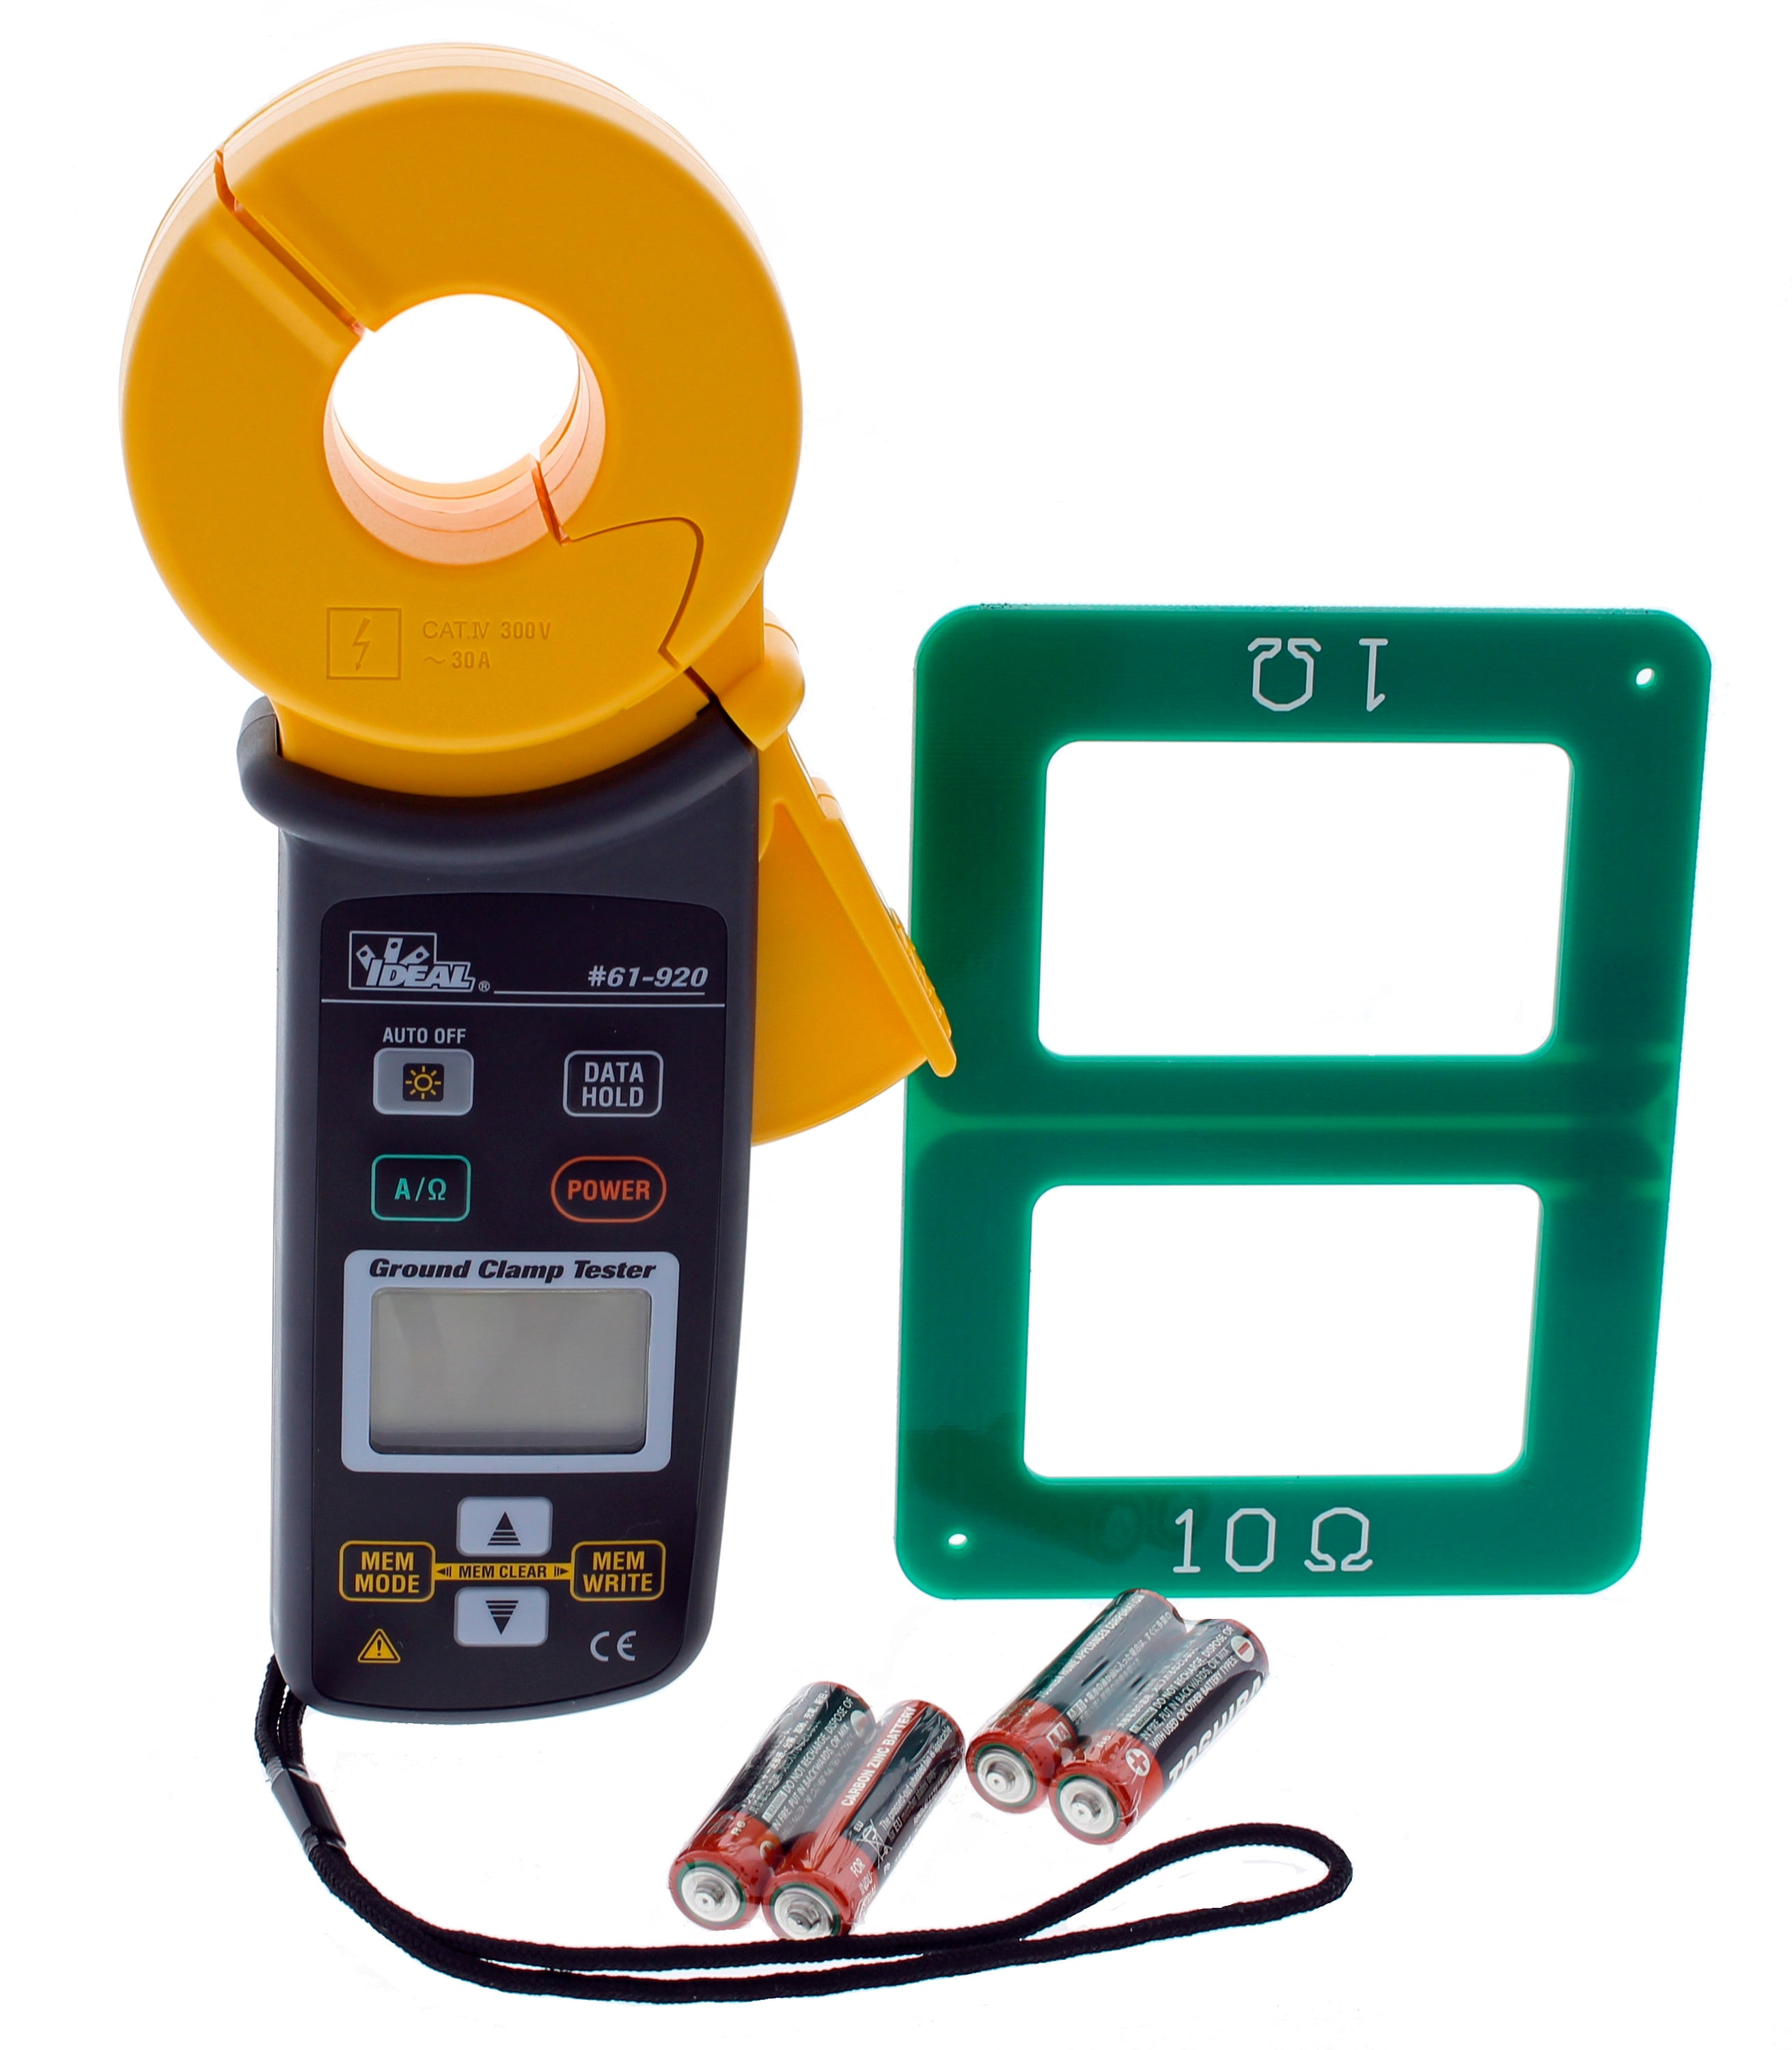 IDEAL Digital Clamp Meter Multimeter 30 Amp in the Multimeters